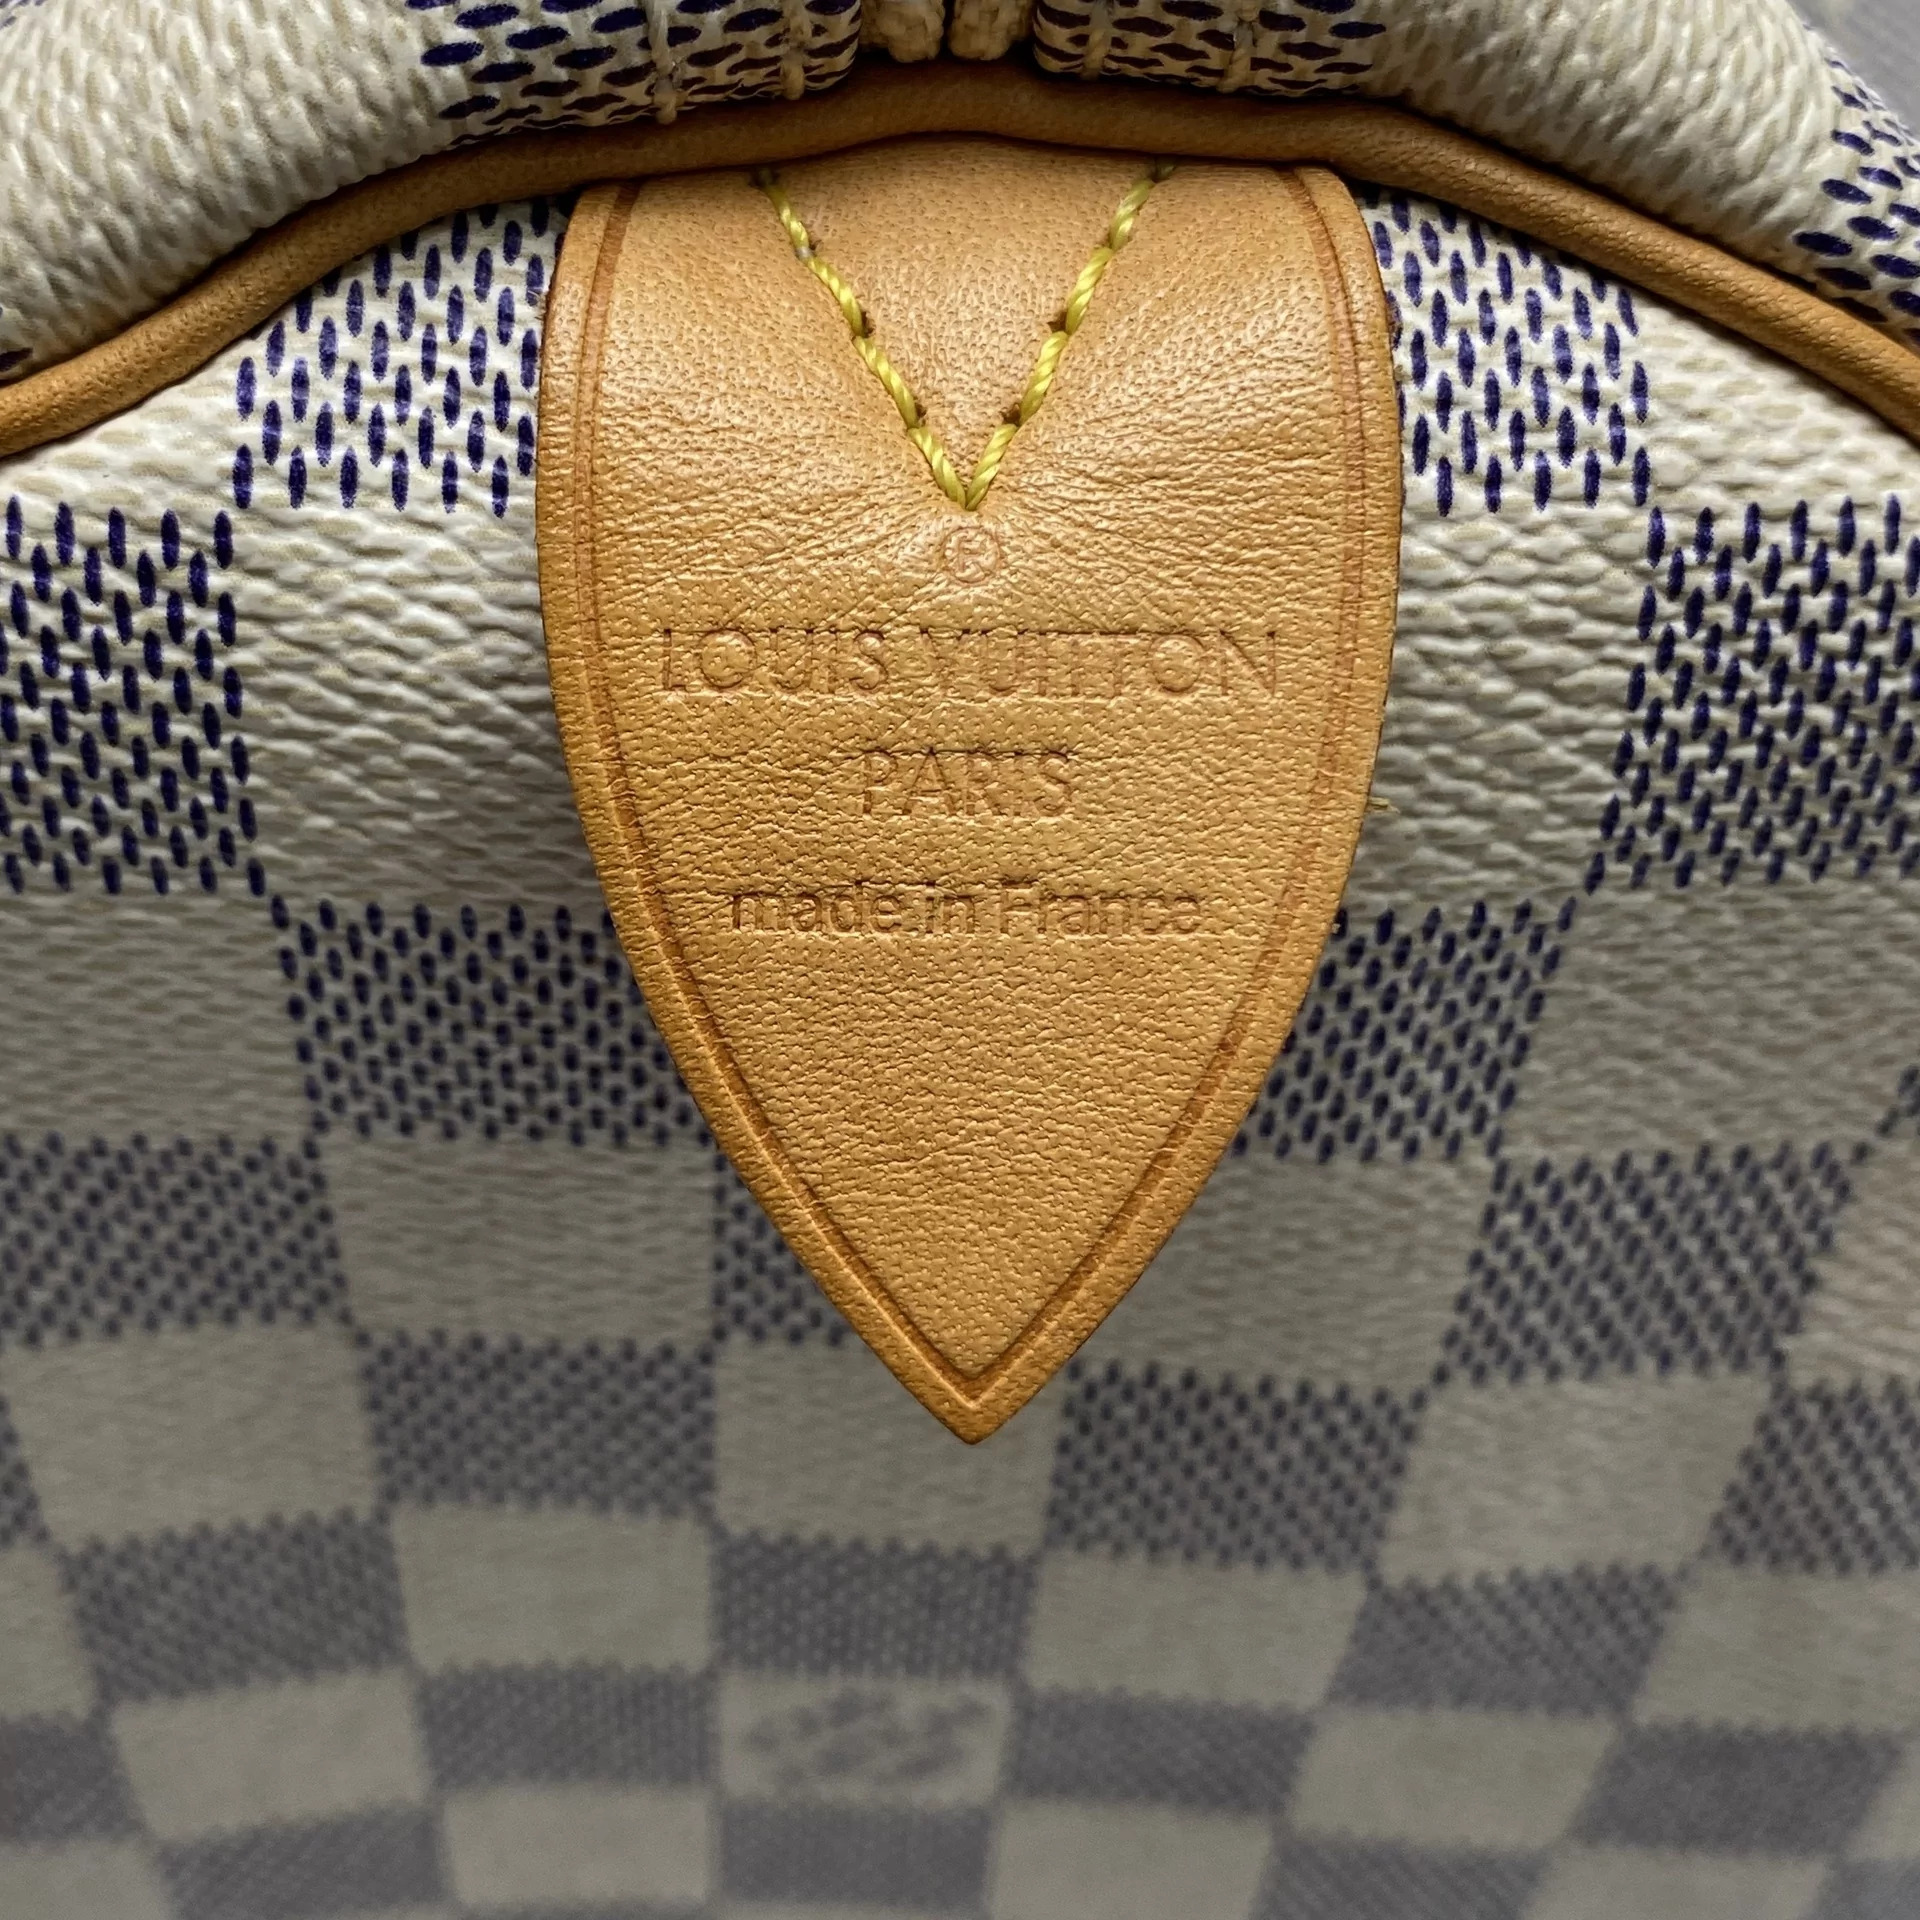 Bolsa Louis Vuitton Speedy 30